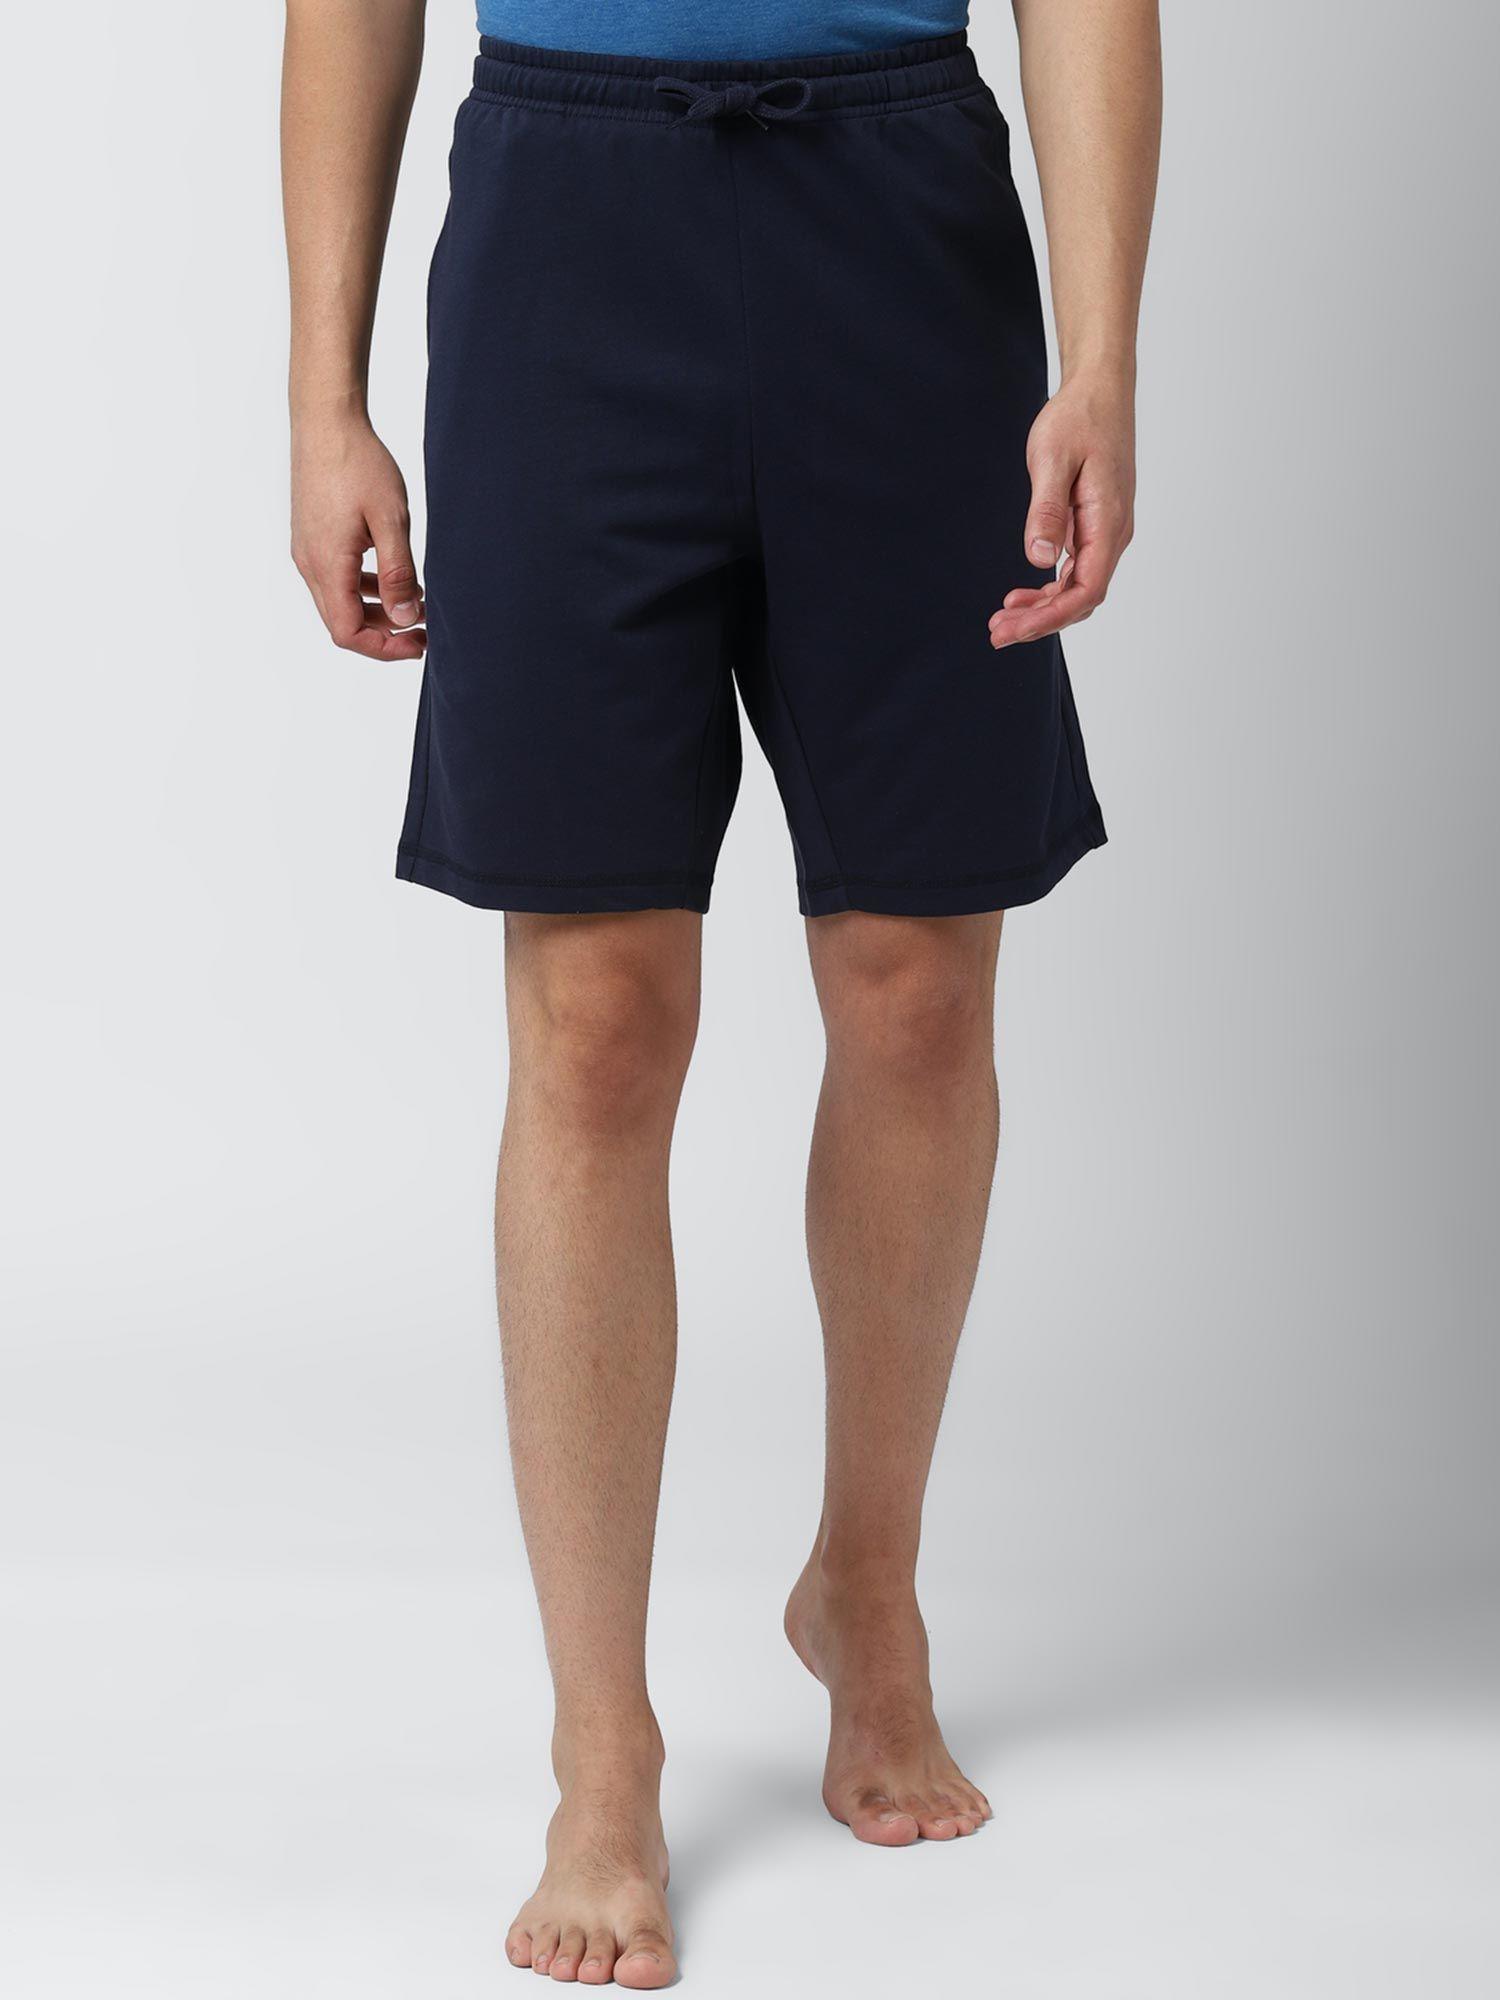 navy blue shorts